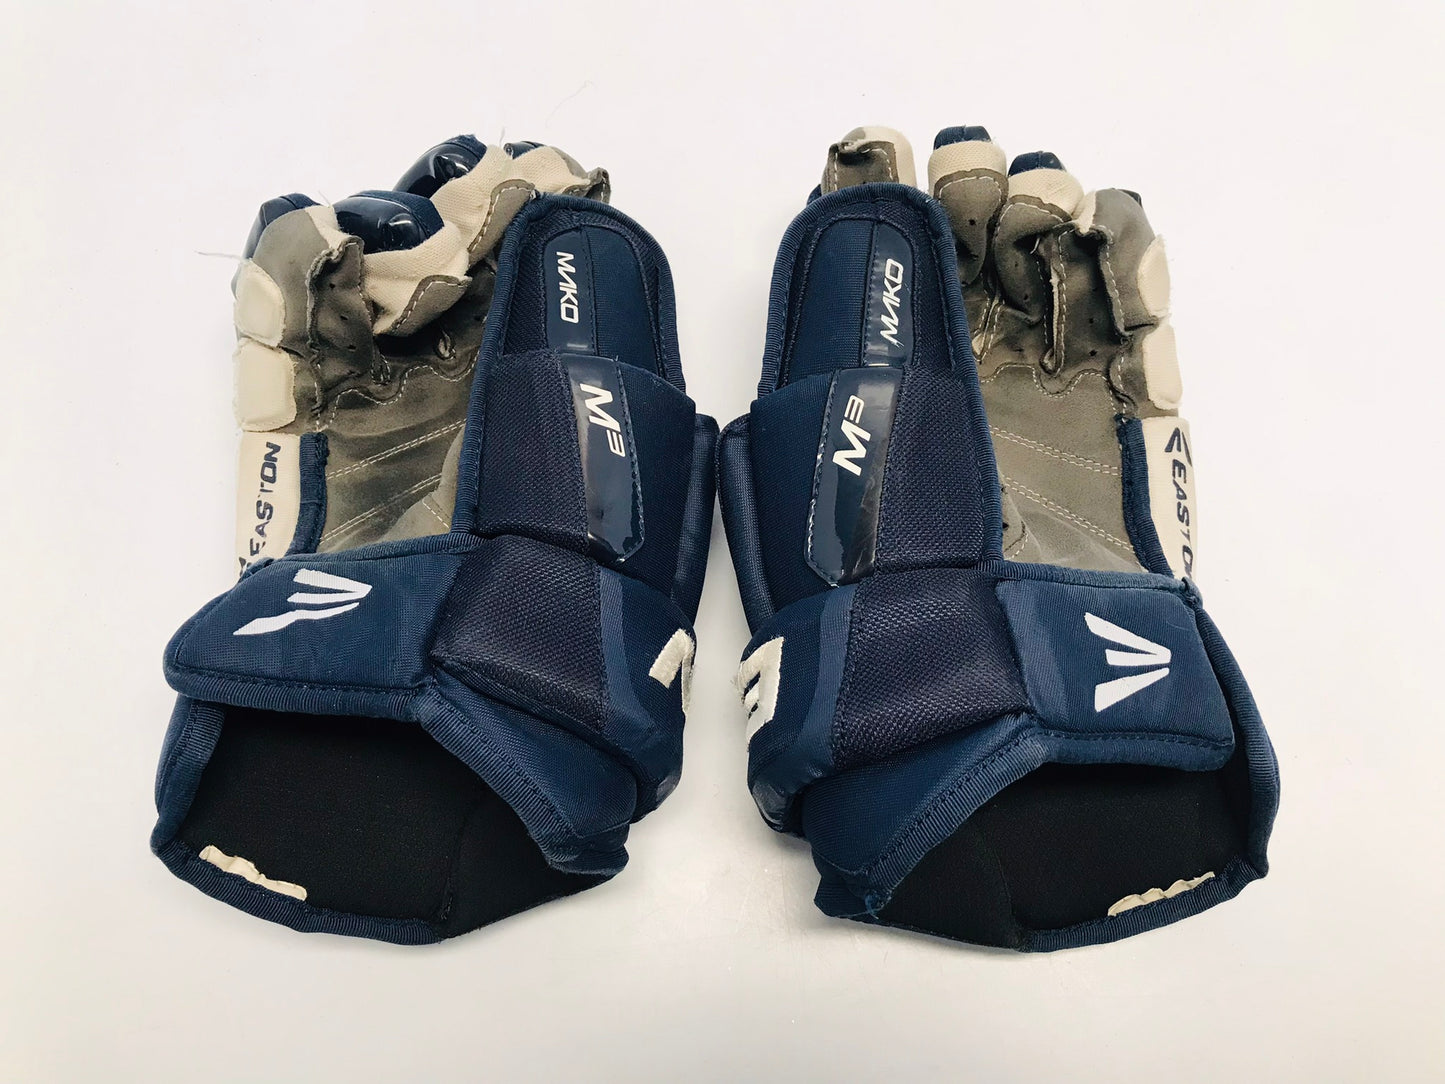 Hockey Gloves Men's Size 14 inch Easton M3 Royal Blue Excellent